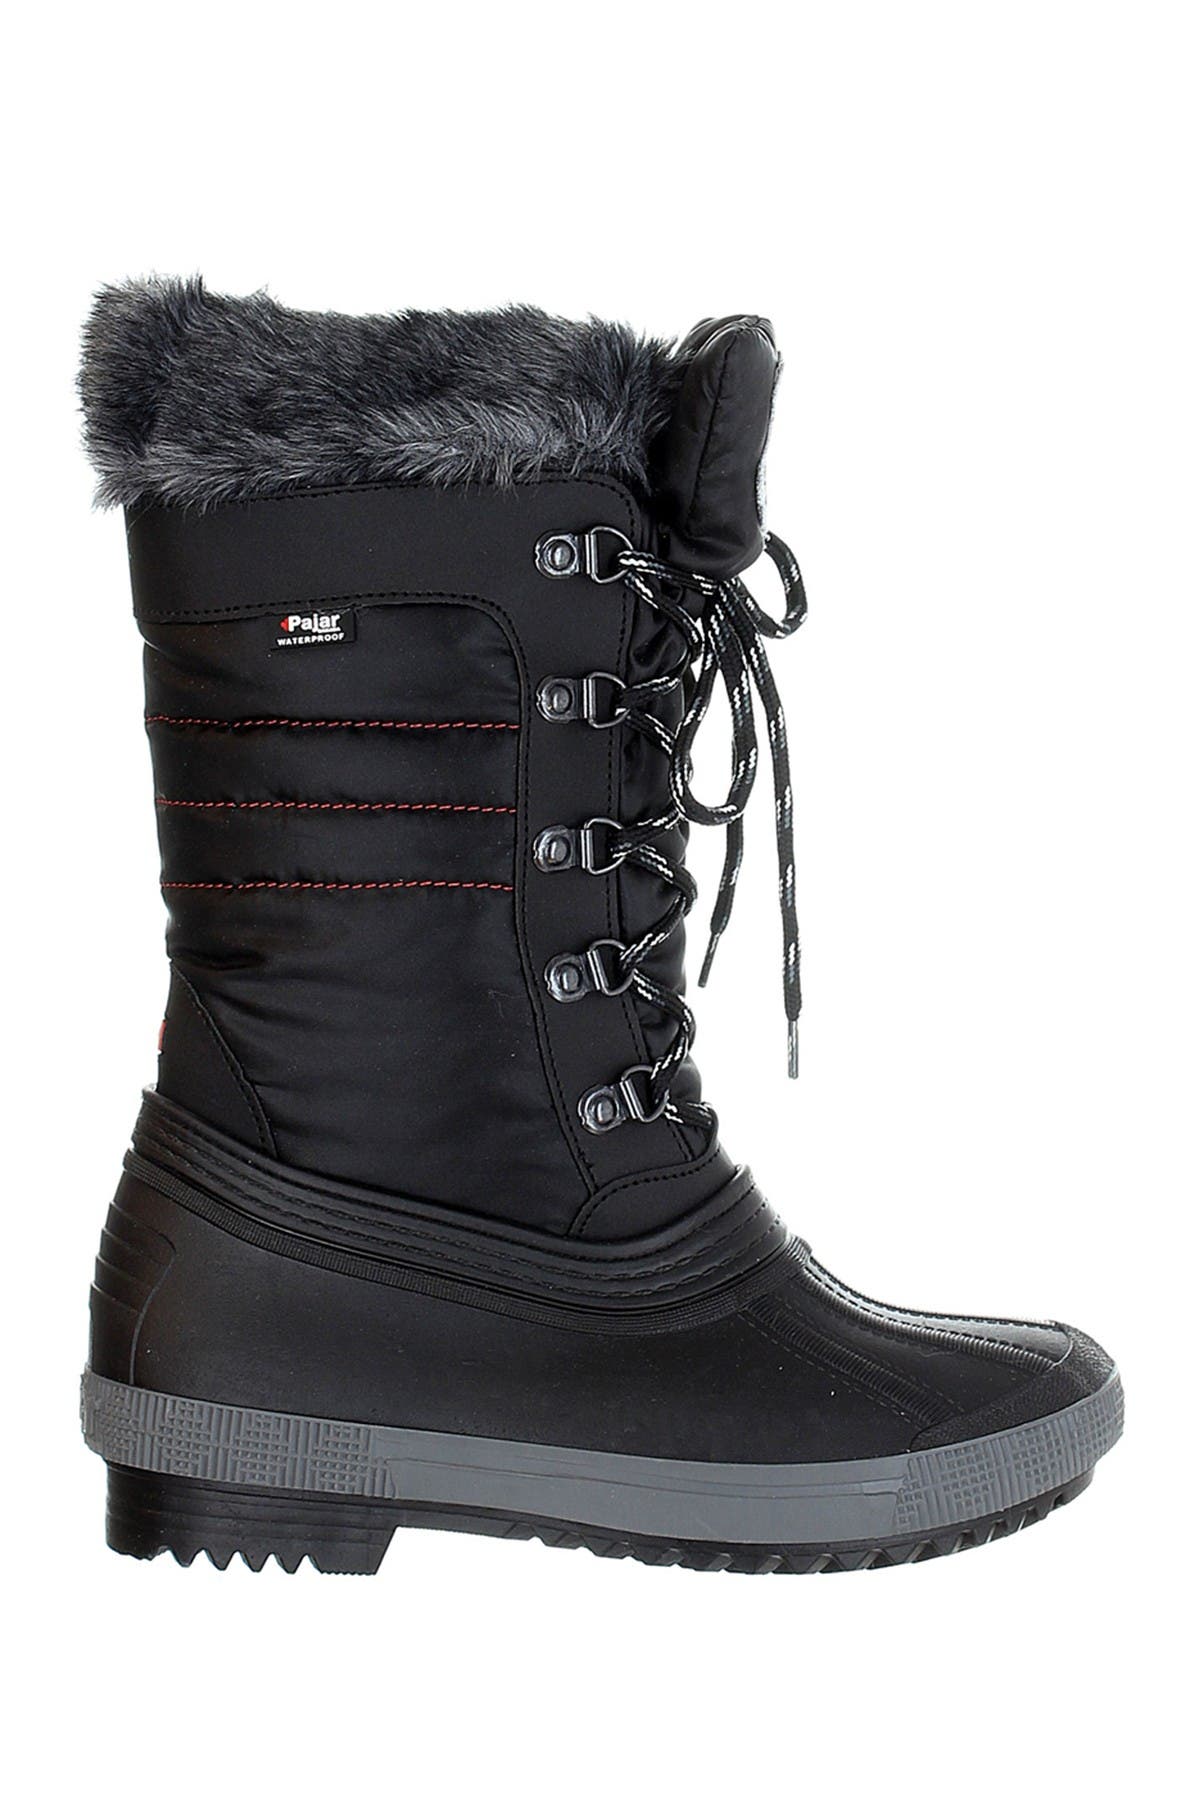 pajar black fur boots